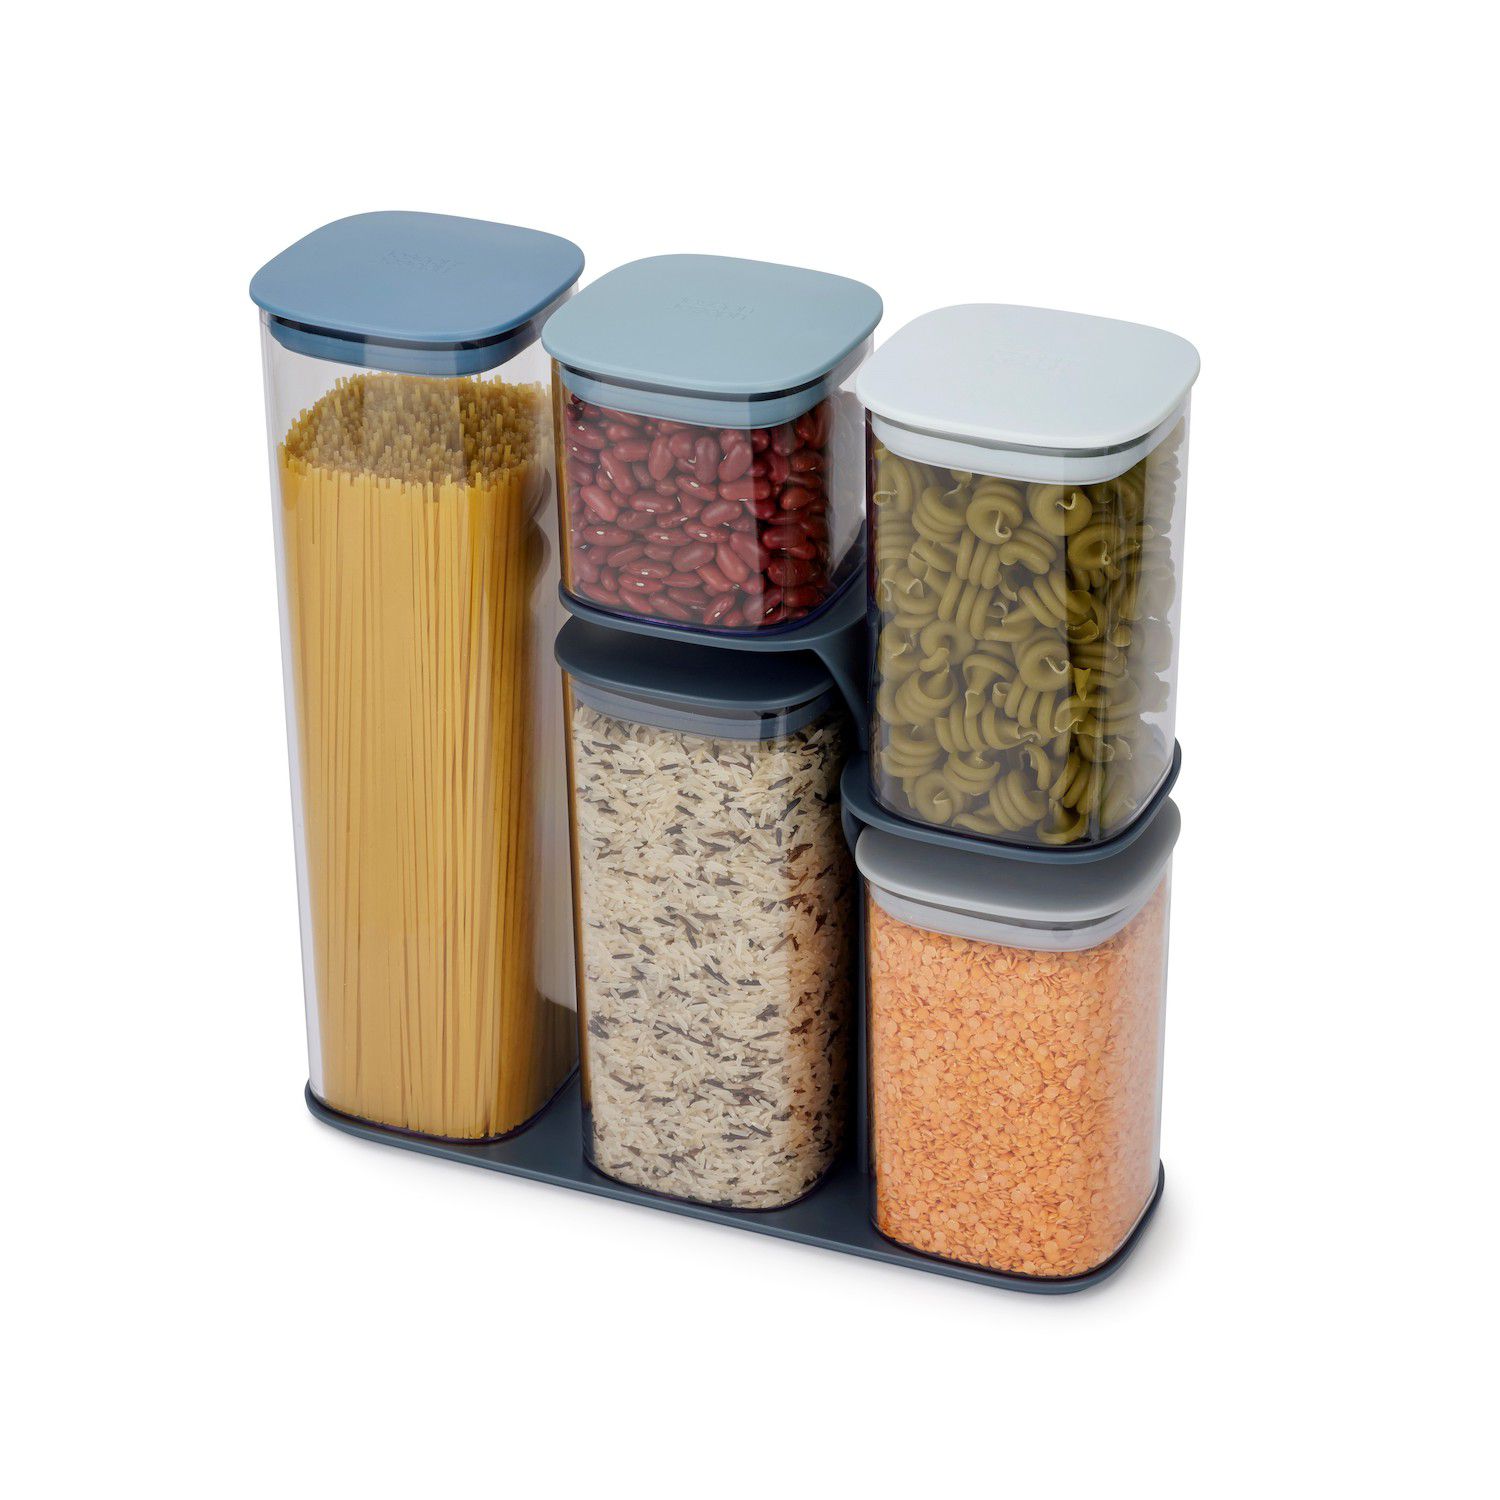 Joseph Joseph Nest Plastic Food Storage Containers Set with Lids Airtight  Microwave Safe, 12-Piece, Multi-color 